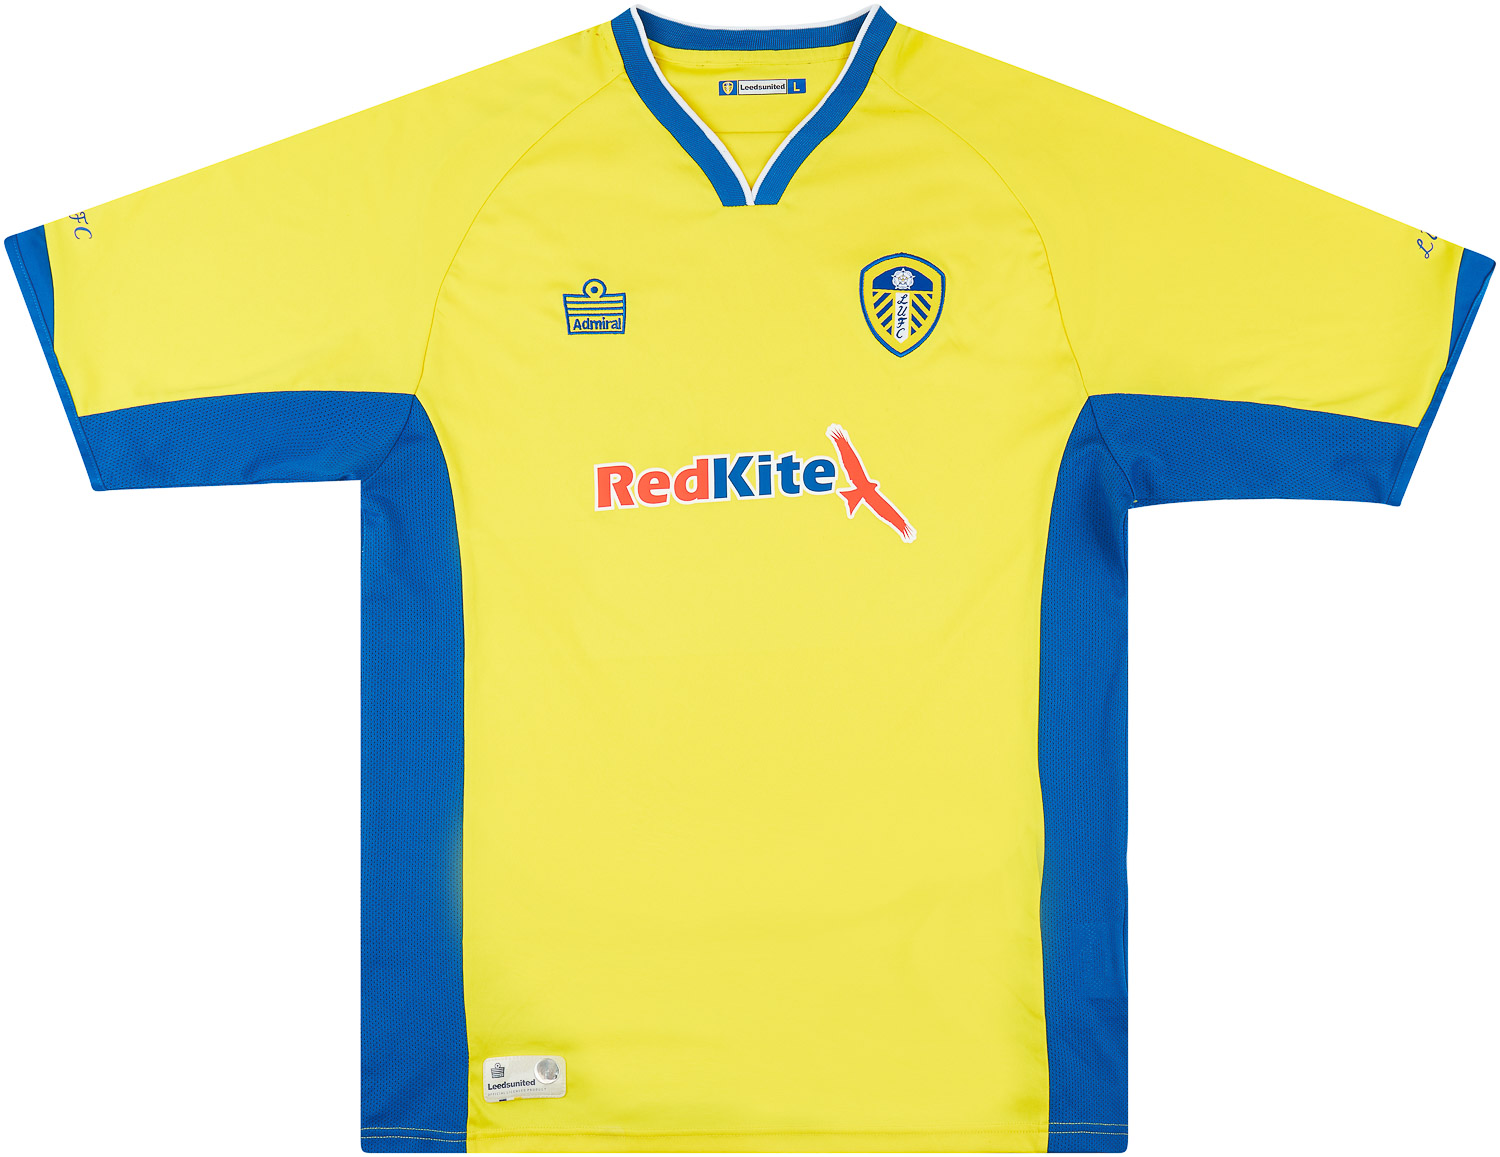 2007-08 Leeds United Away Shirt - 6/10 - ()